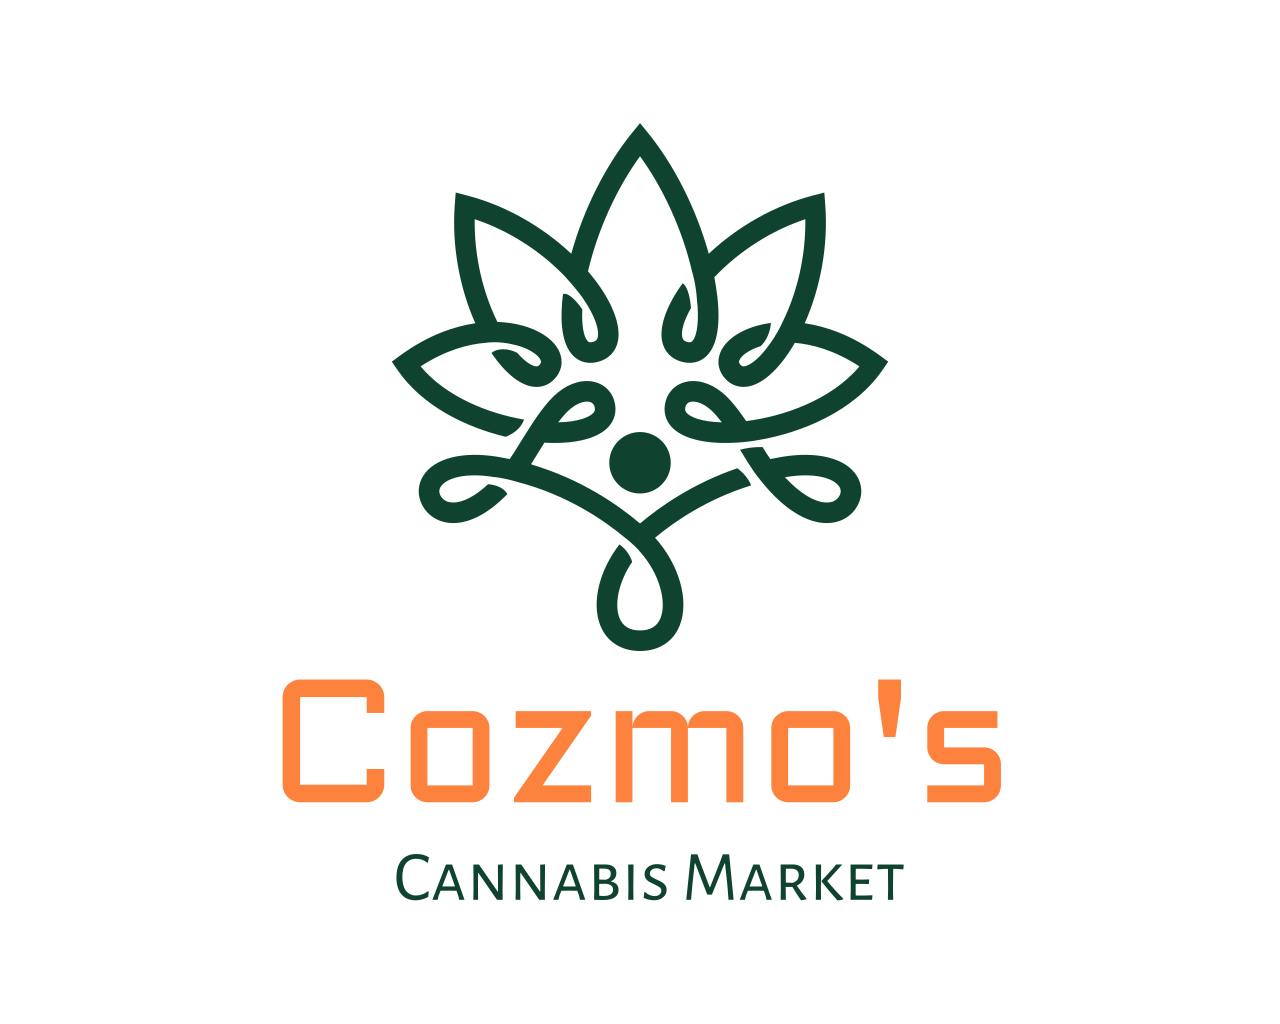 Cozmo's Cannabis Market logo